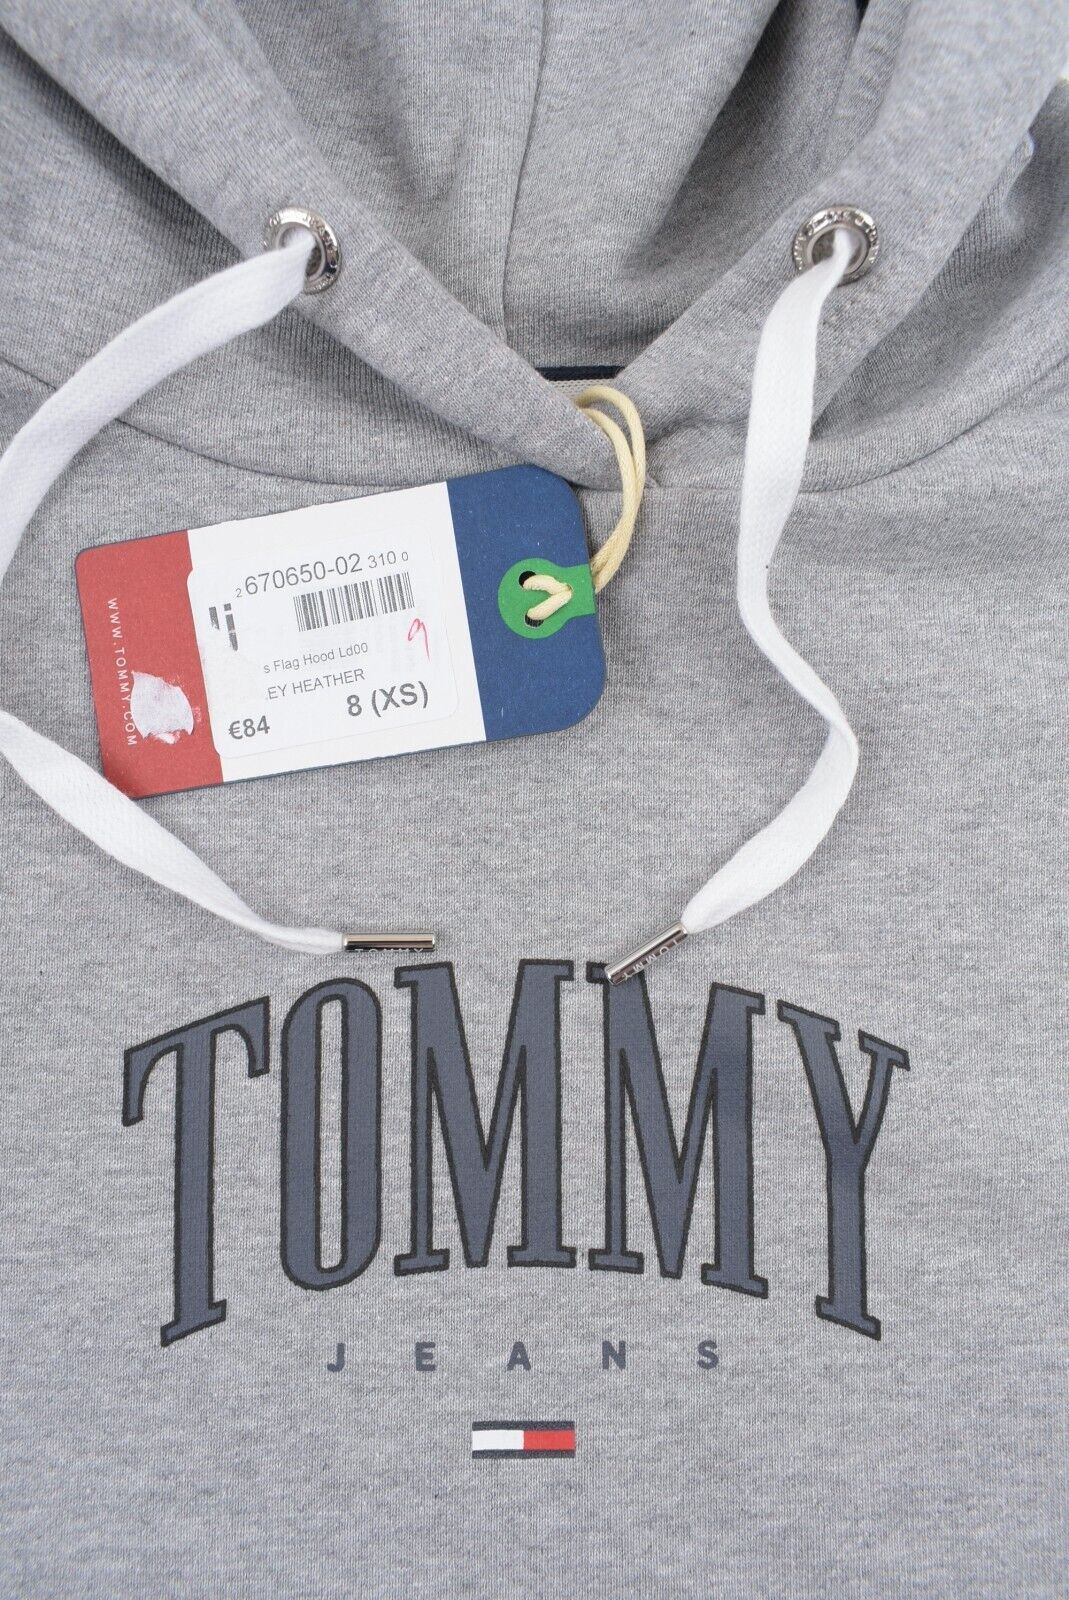 TOMMY HILFIGER Women's Logo Hoodie, Hooded Sweatshirt, Grey Heather, size XS